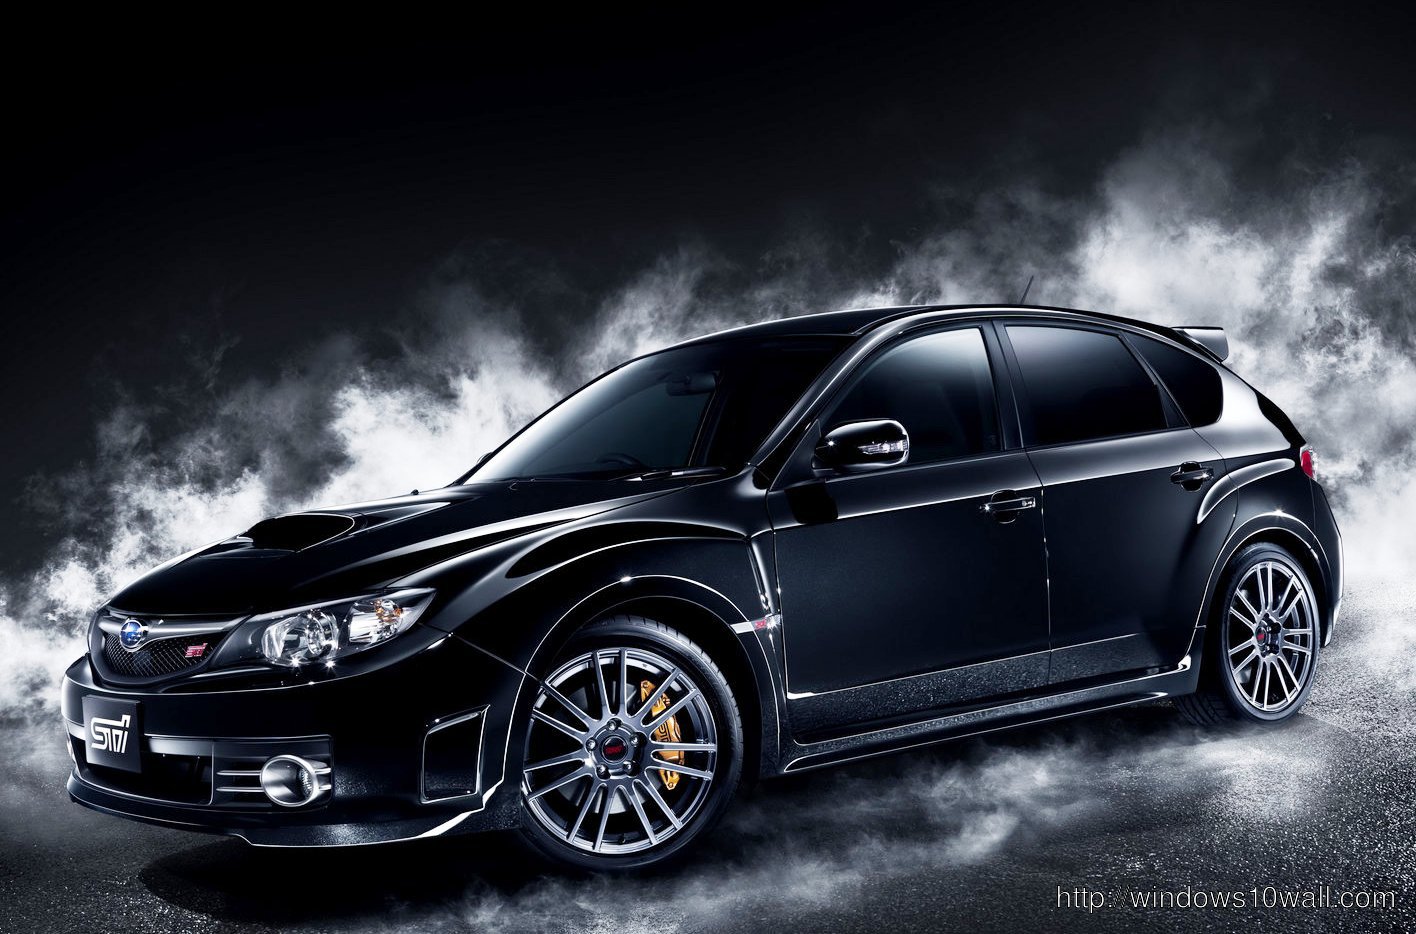 2010 Subaru STi — Fast and Furious 5 Car Background Wallpaper